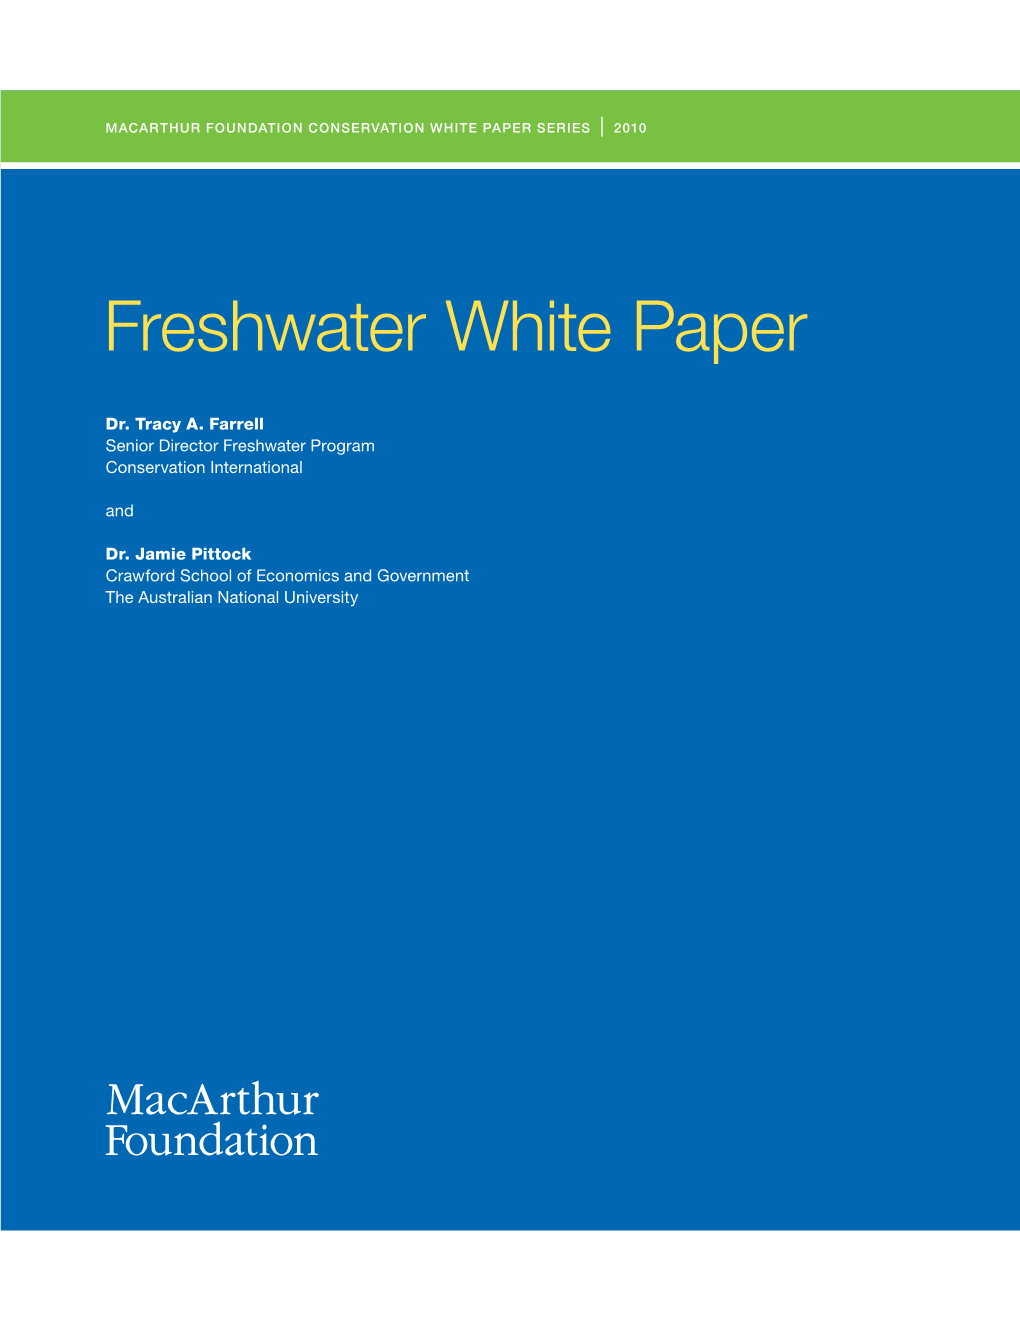 Freshwater White Paper